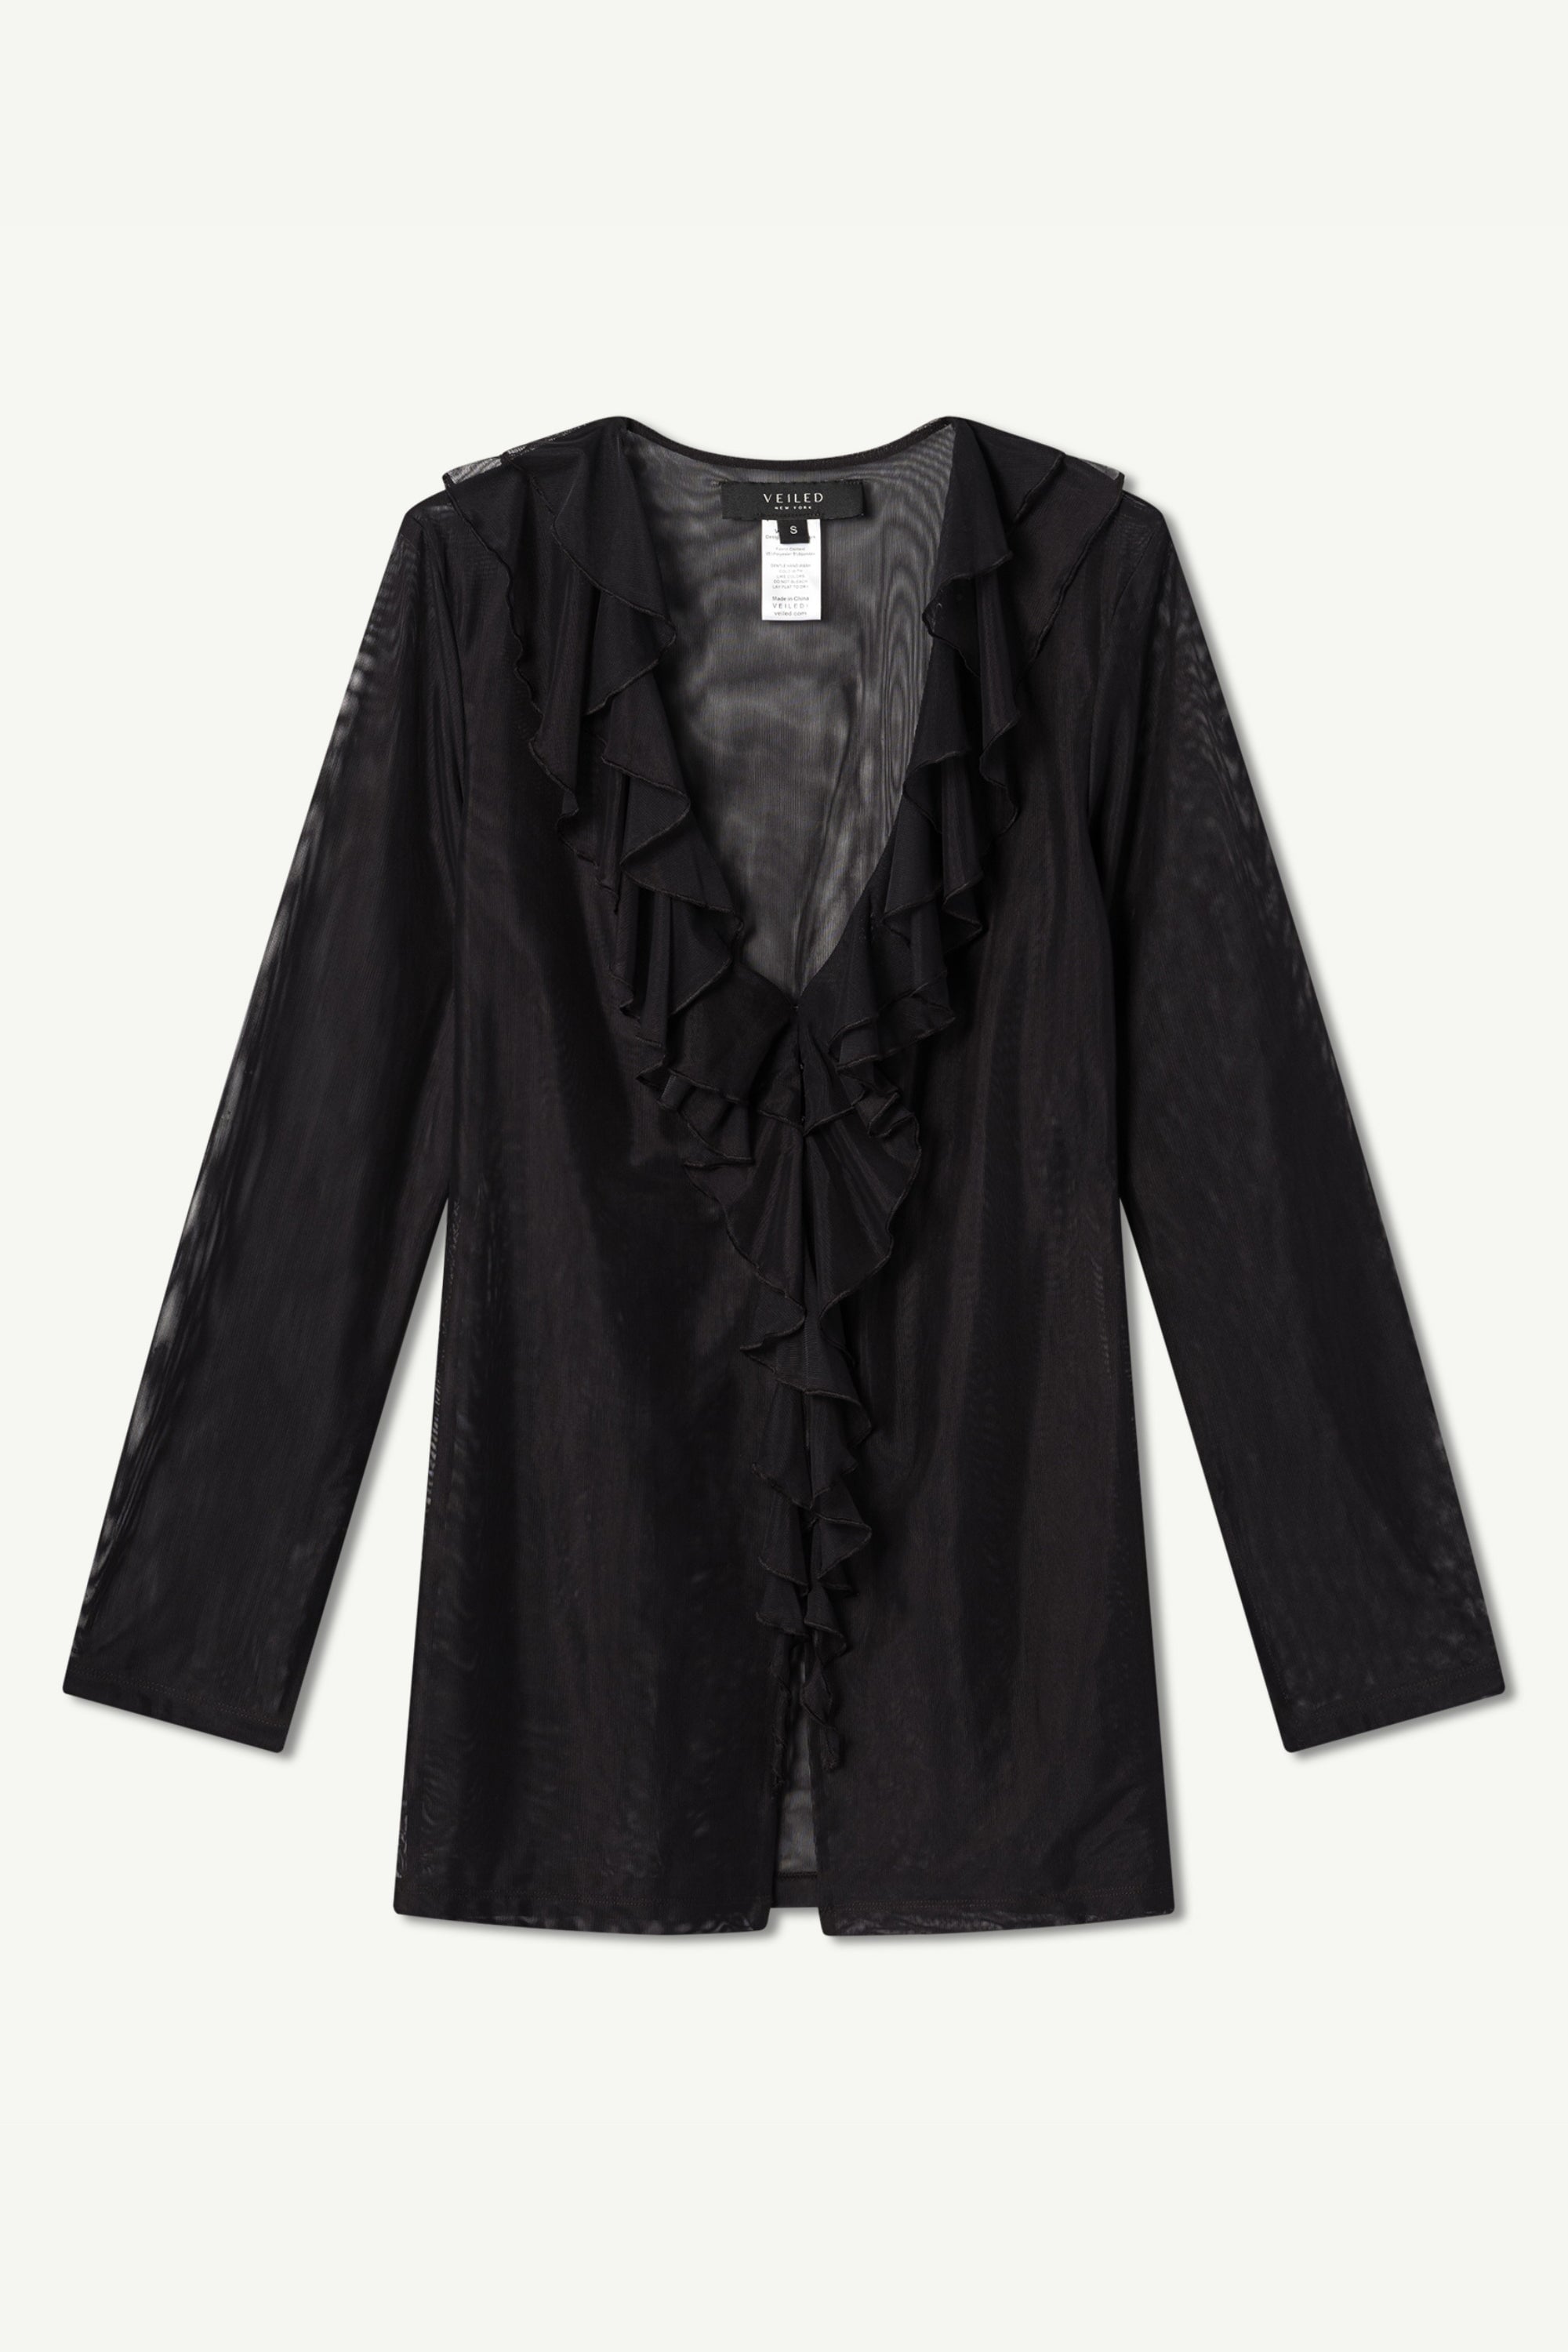 Mesh Ruffle Top - Black Clothing Veiled 